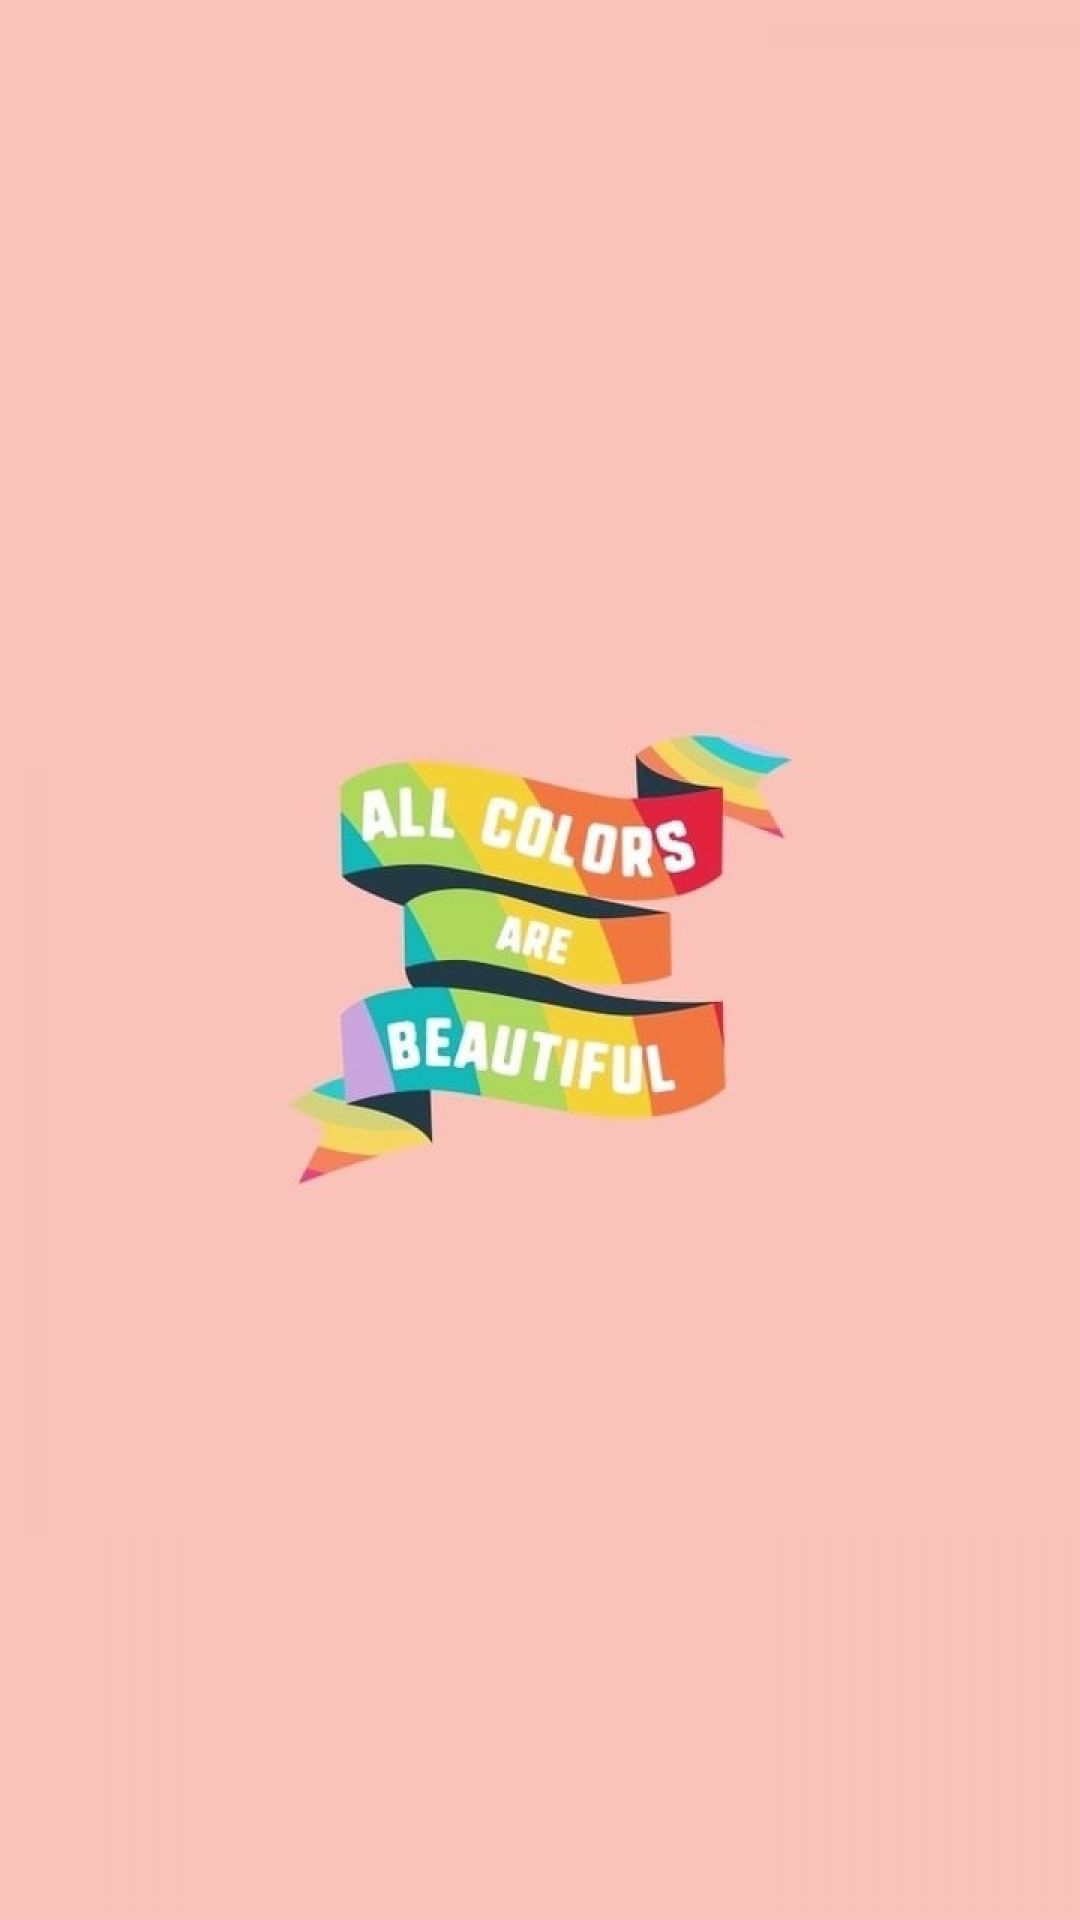 All colors are beautiful wallpaper - Pride